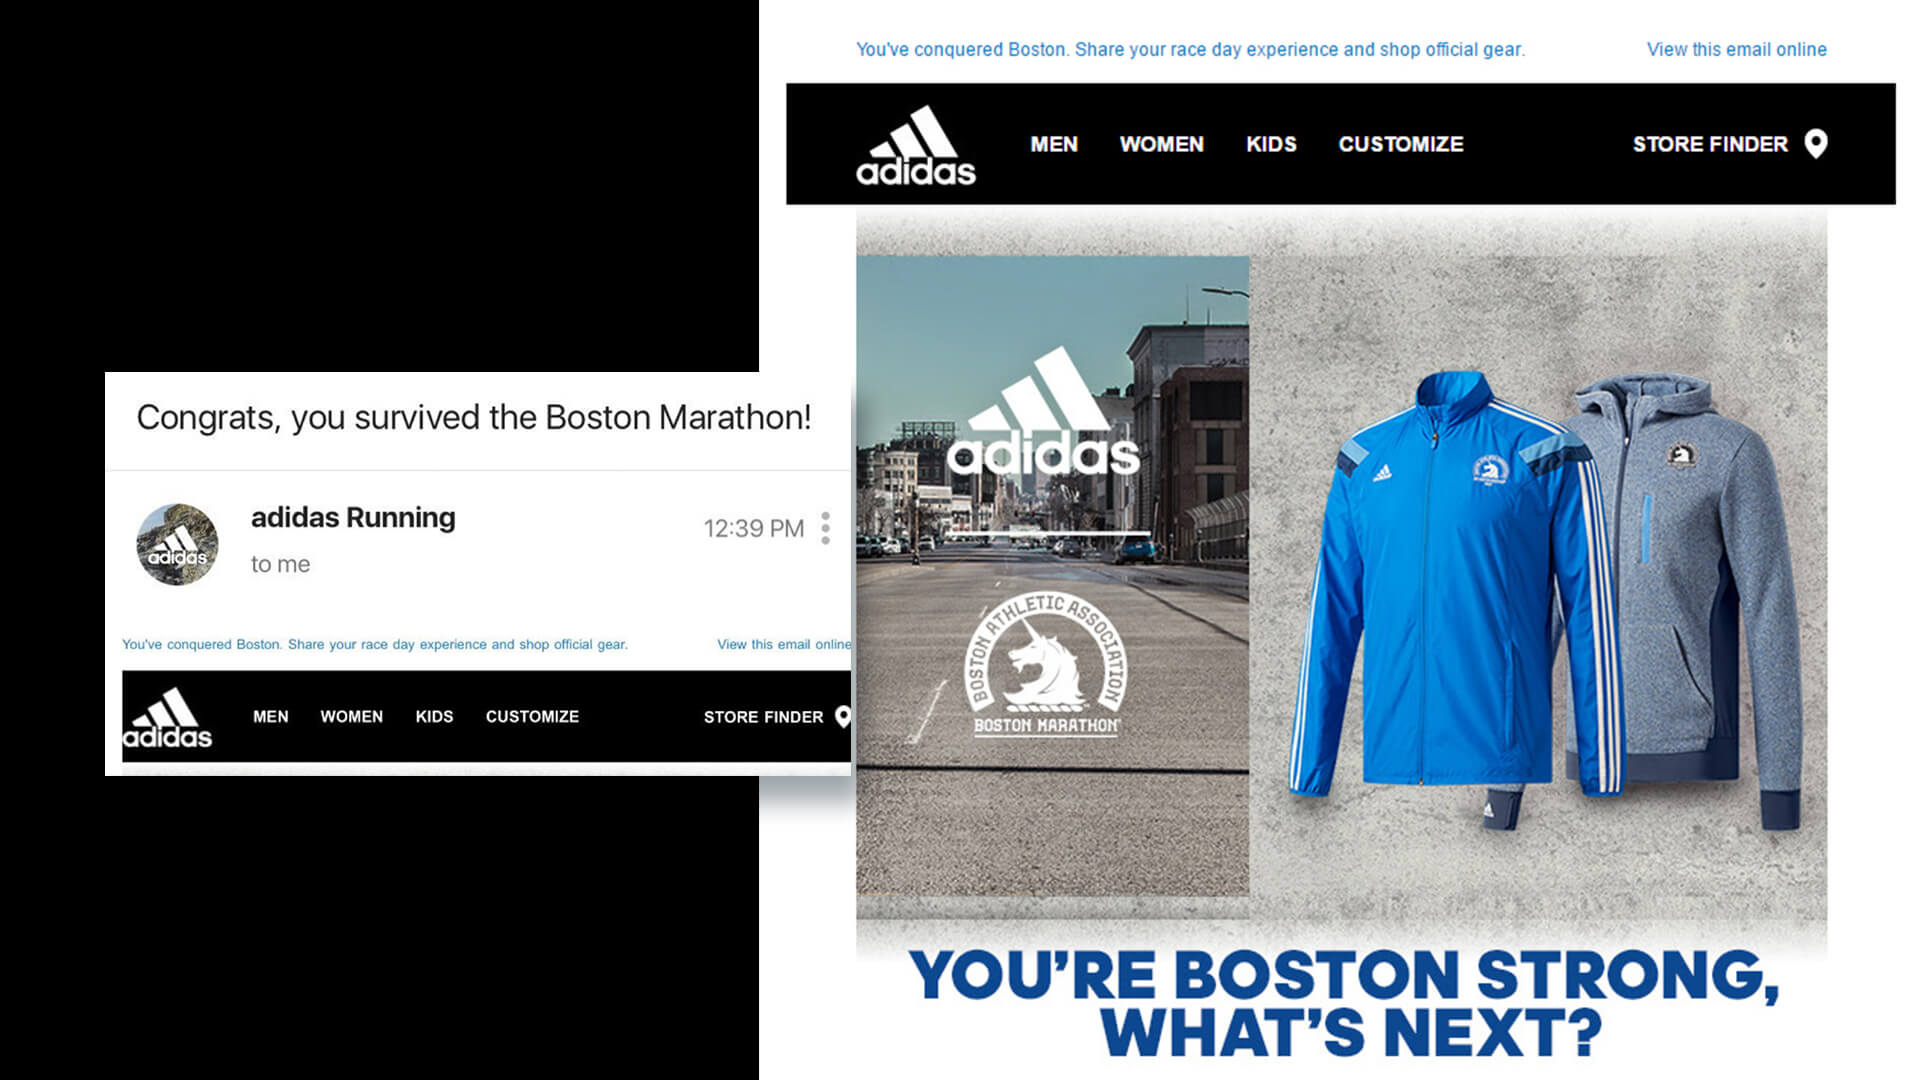 Adidas Boston Marathon Email marketing fails